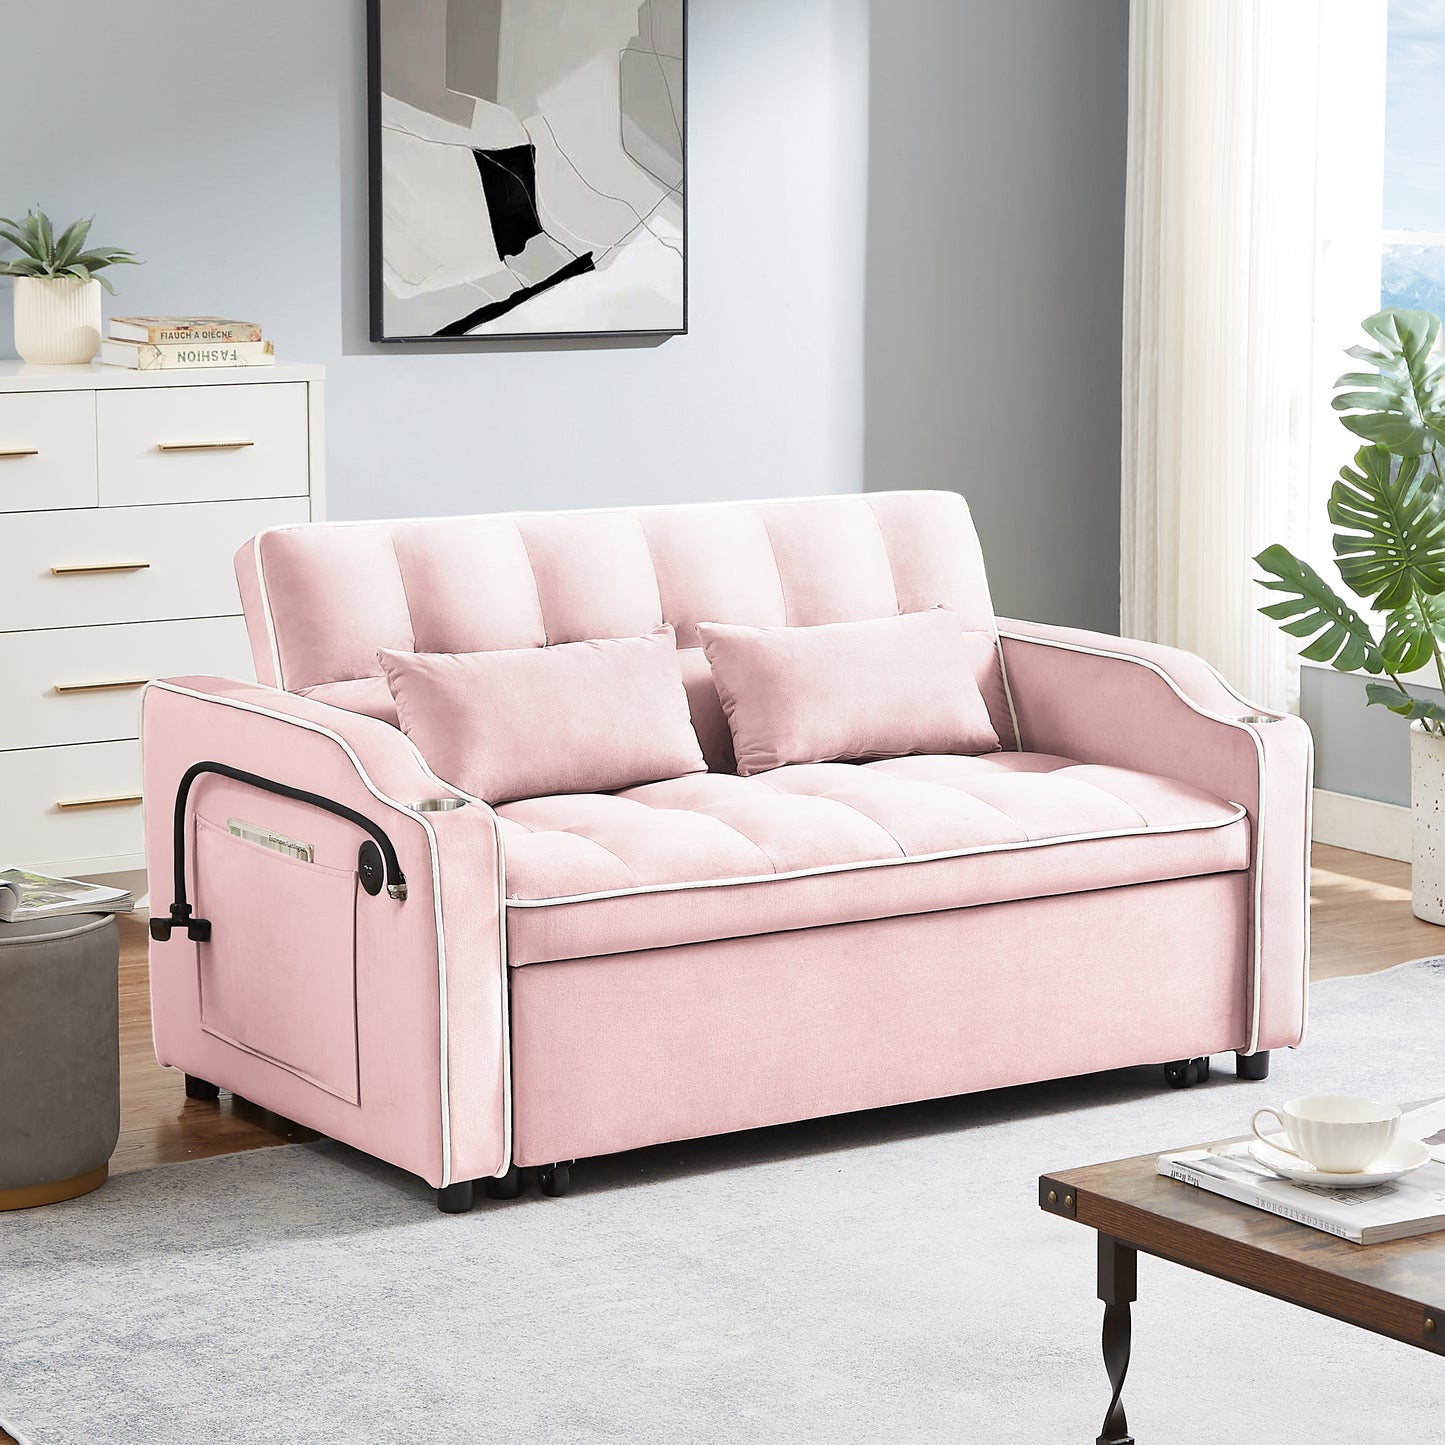 3-in-1 Versatile Pink Velvet Sofa Bed with Adjustable Back and USB Port